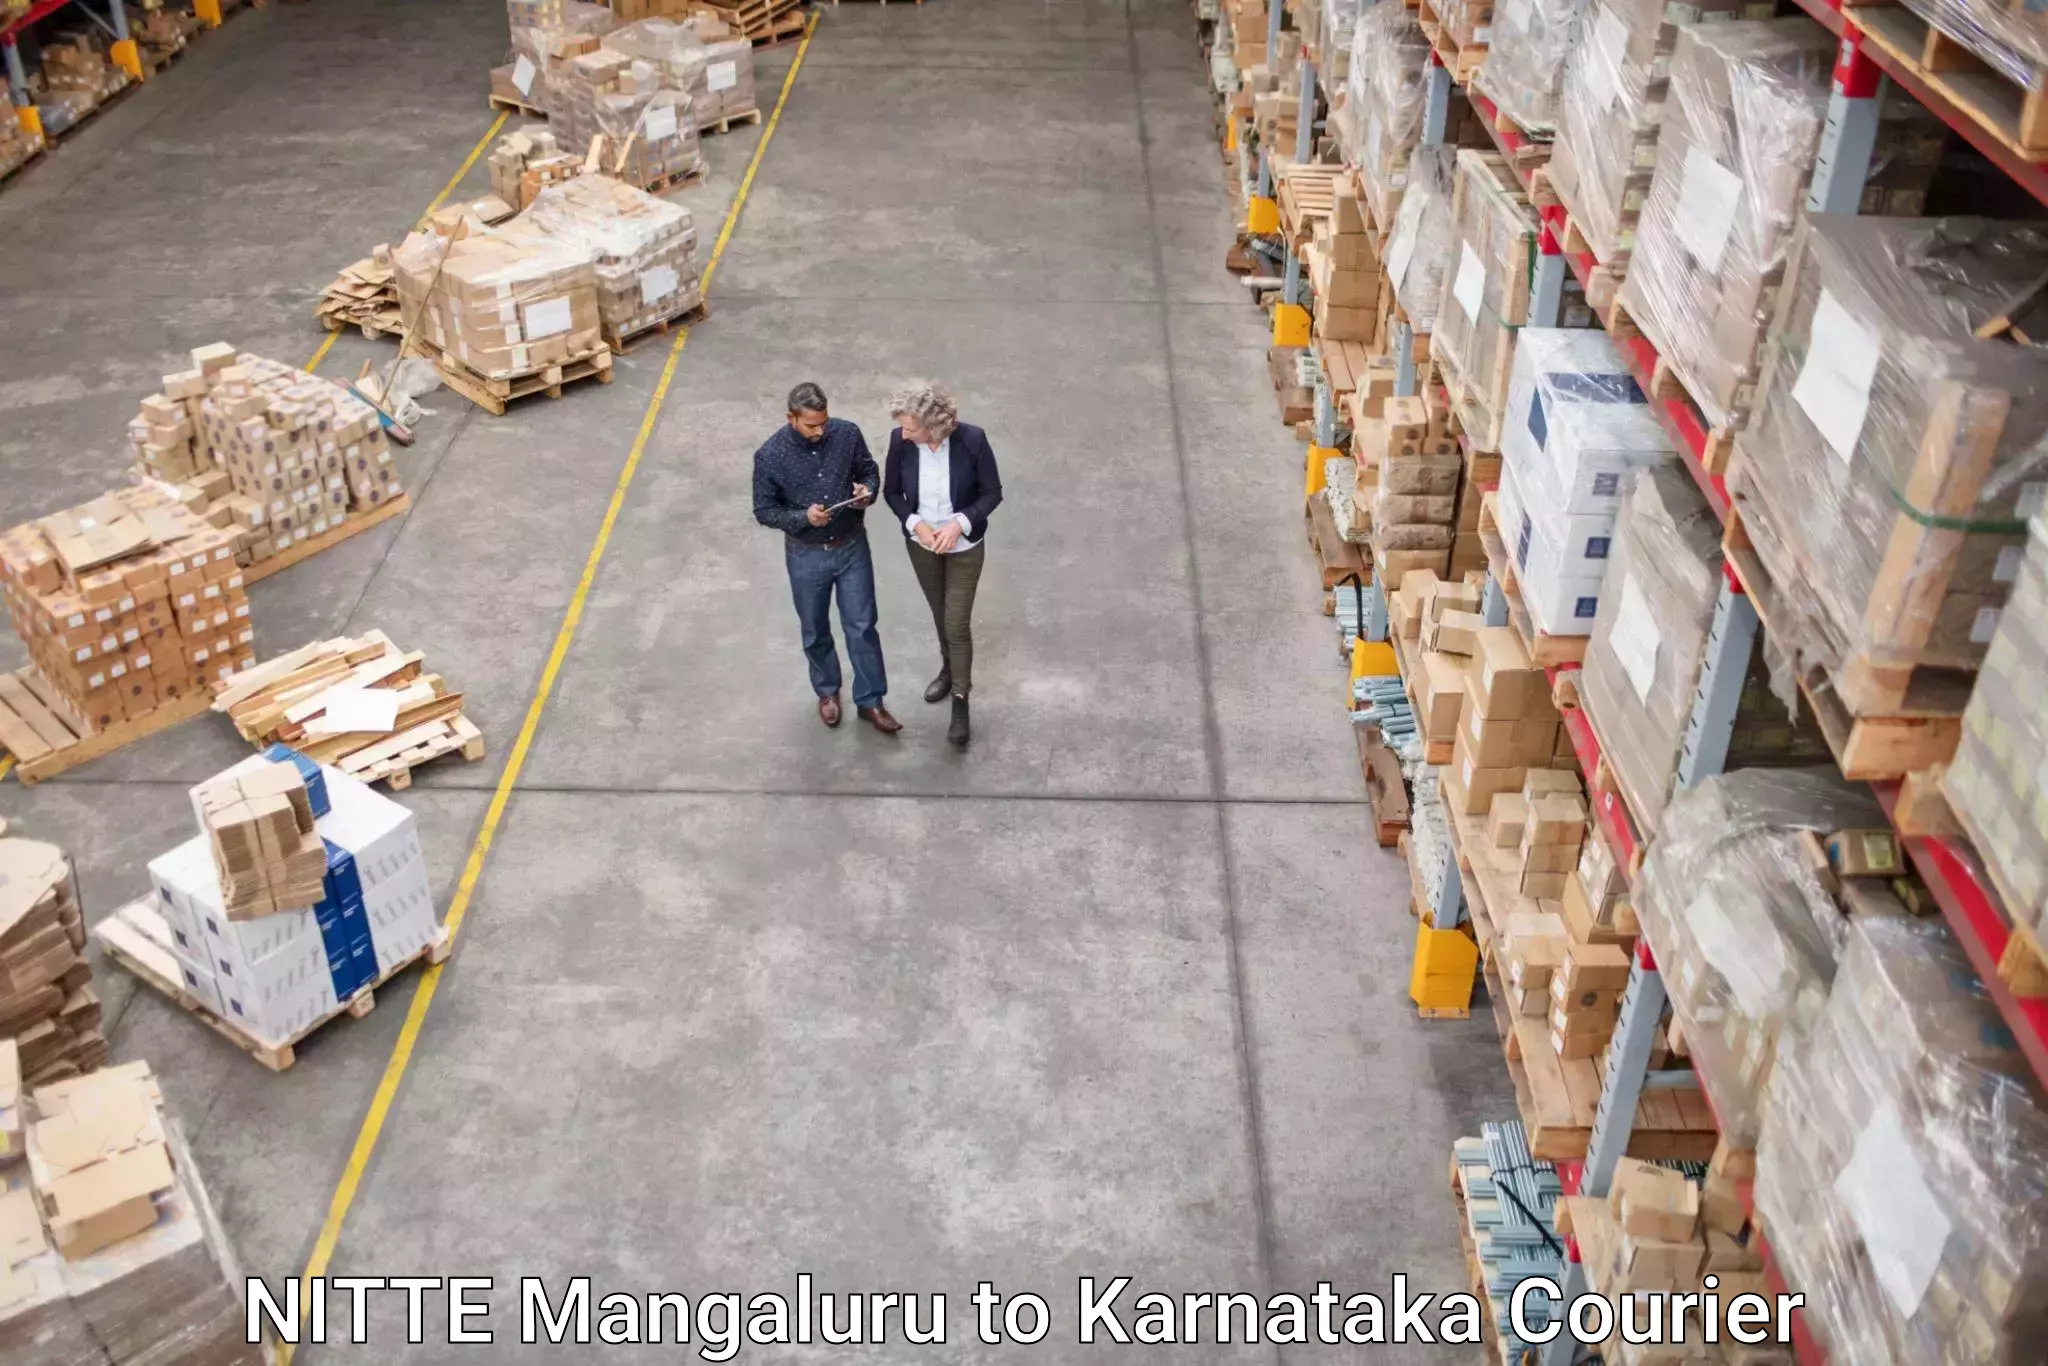 Professional courier handling NITTE Mangaluru to Arsikere